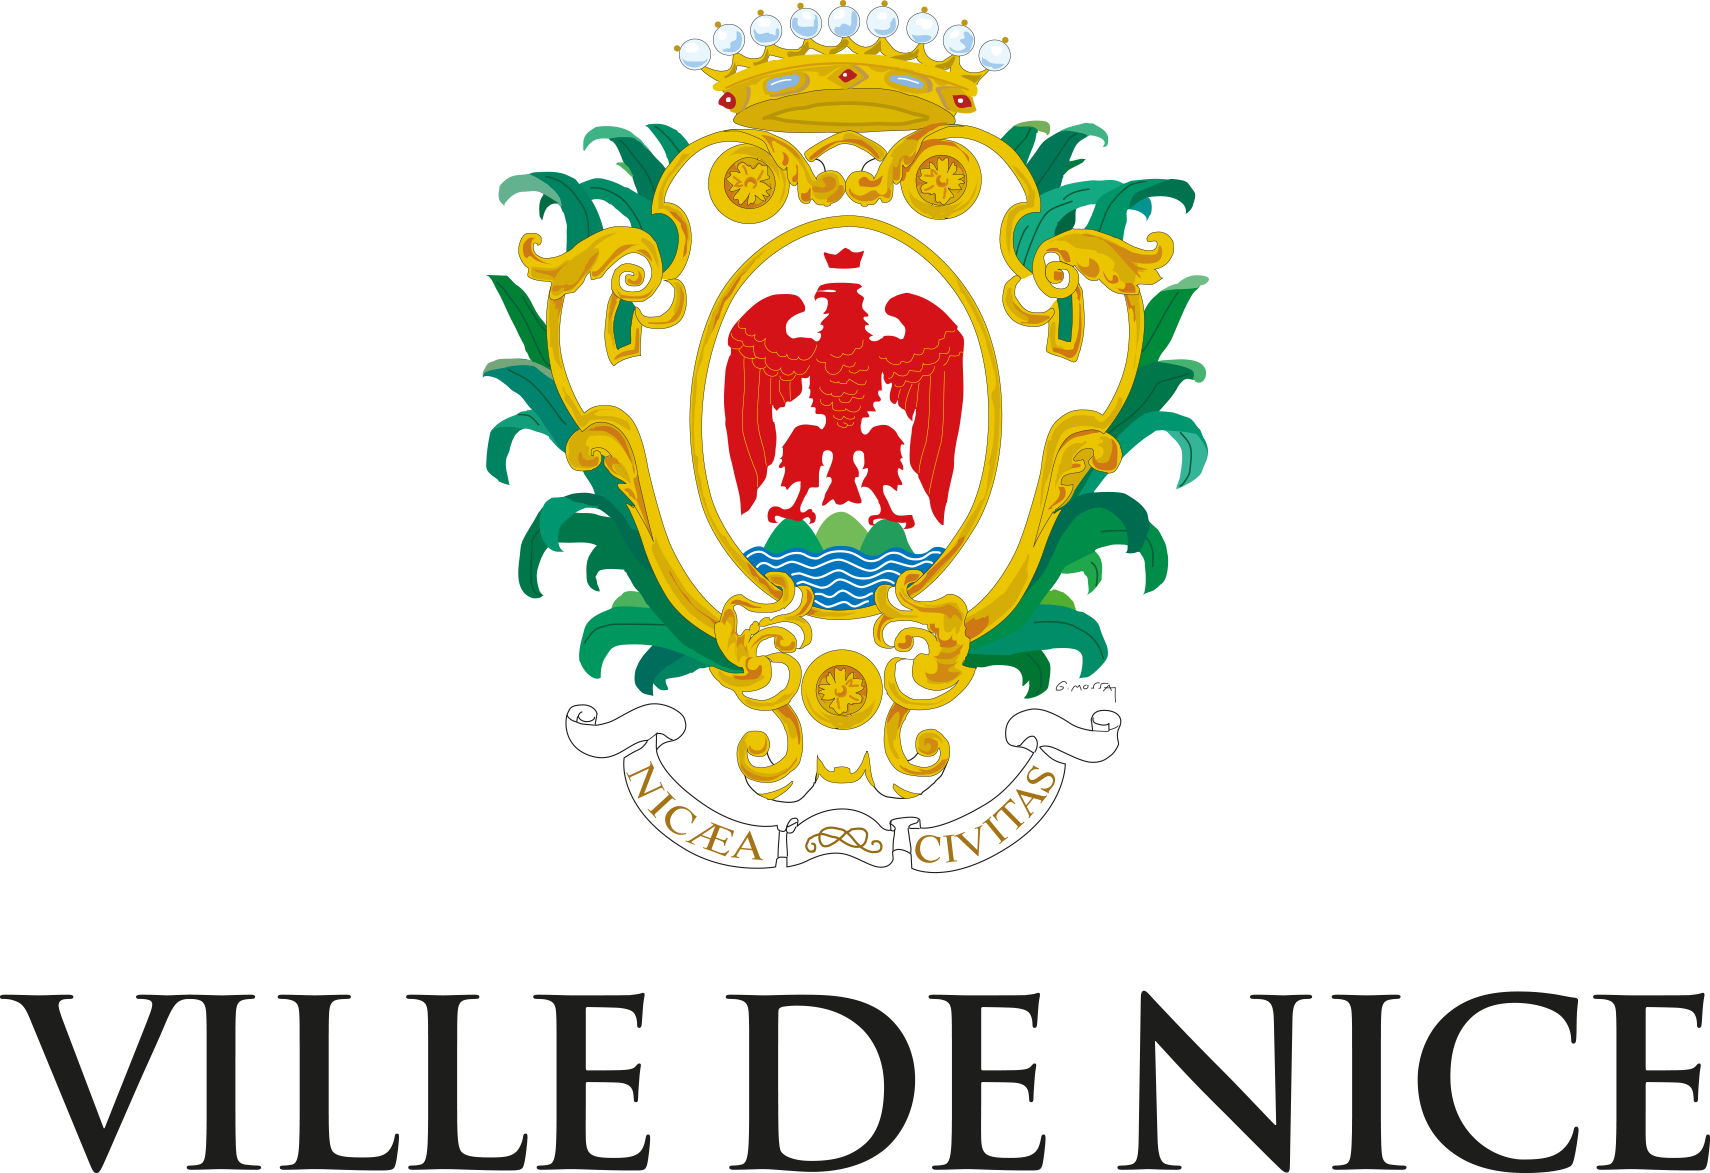 Logo de la ville de Nice